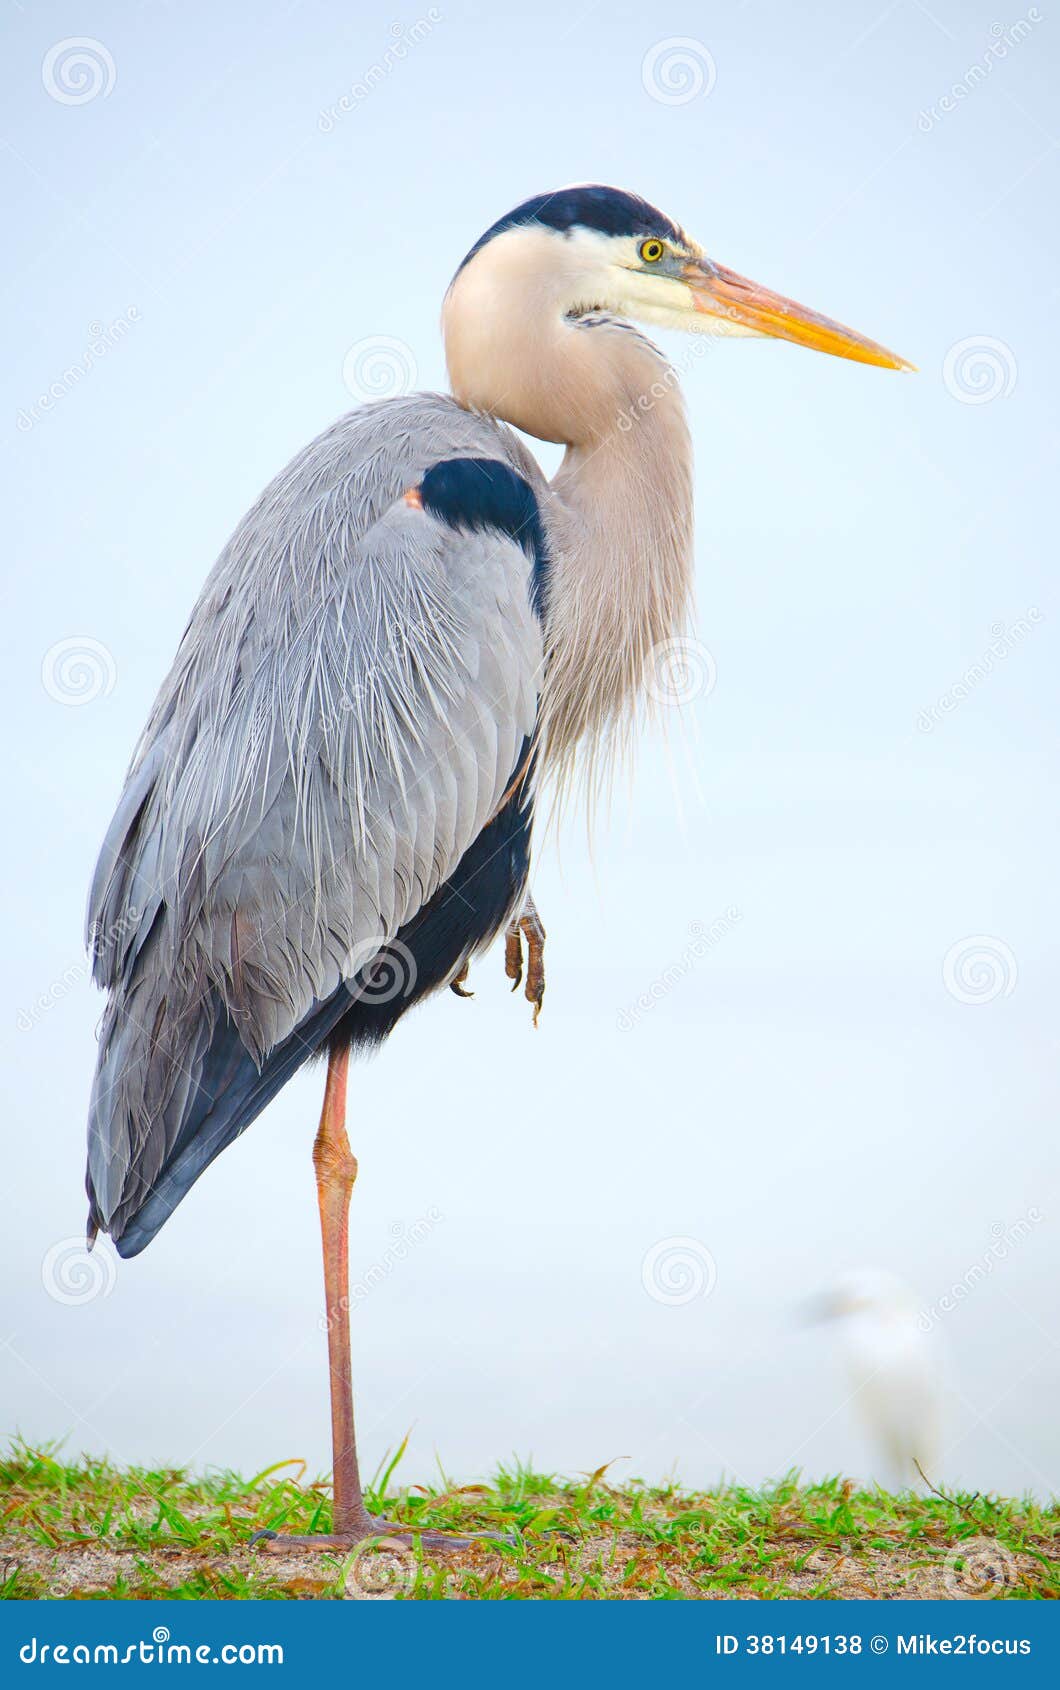 great blue heron bird resting on one leg